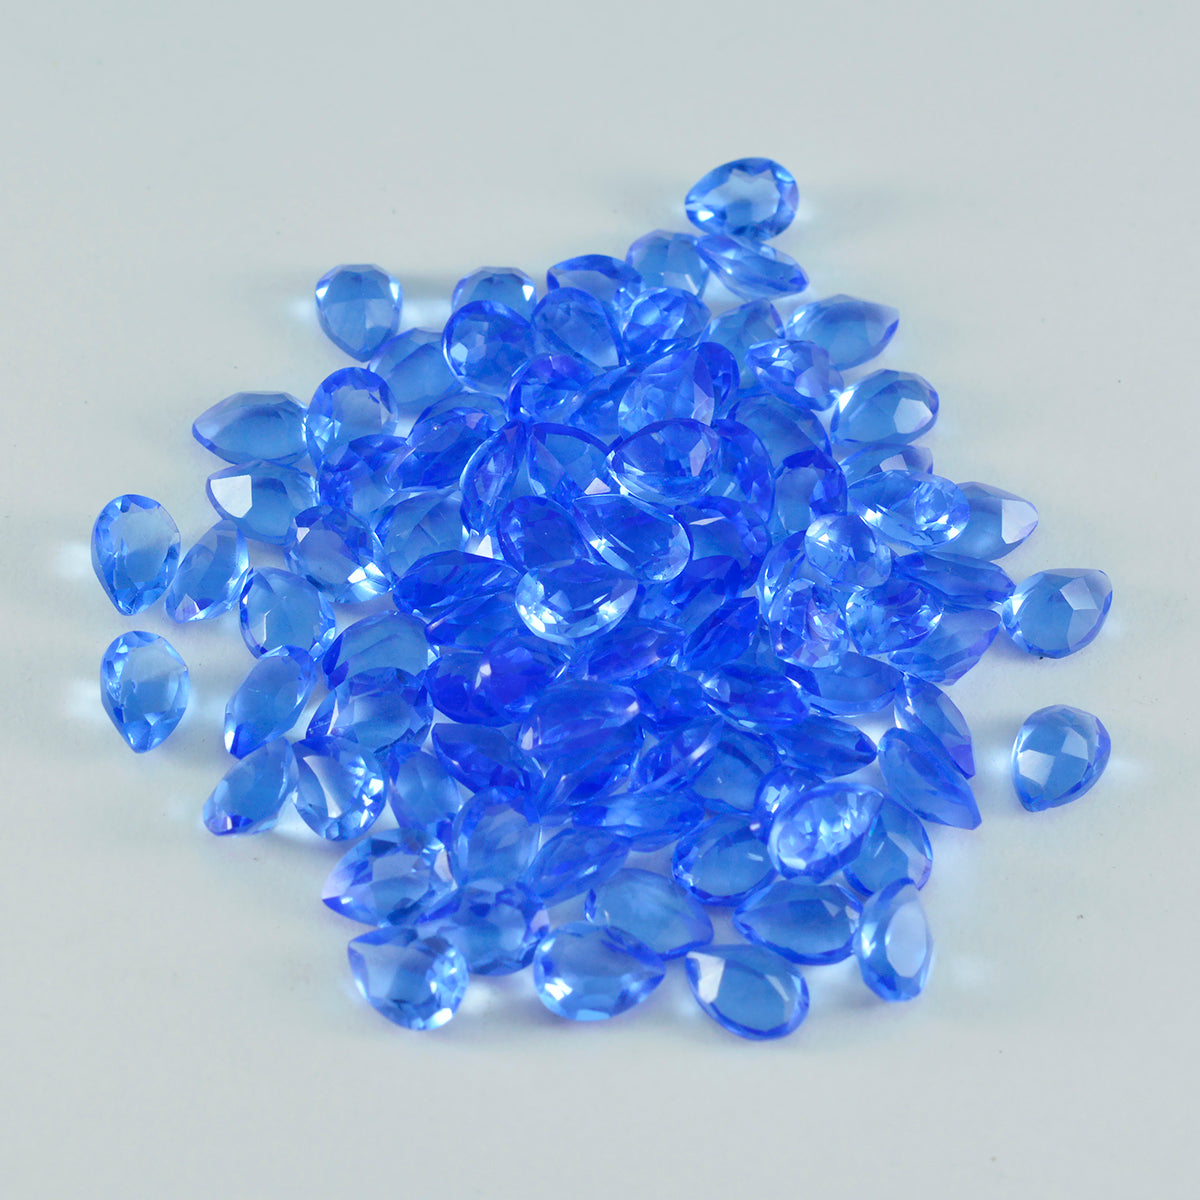 riyogems 1 pezzo di zaffiro blu cz sfaccettato 3x5 mm a forma di pera, pietra preziosa sfusa di bella qualità